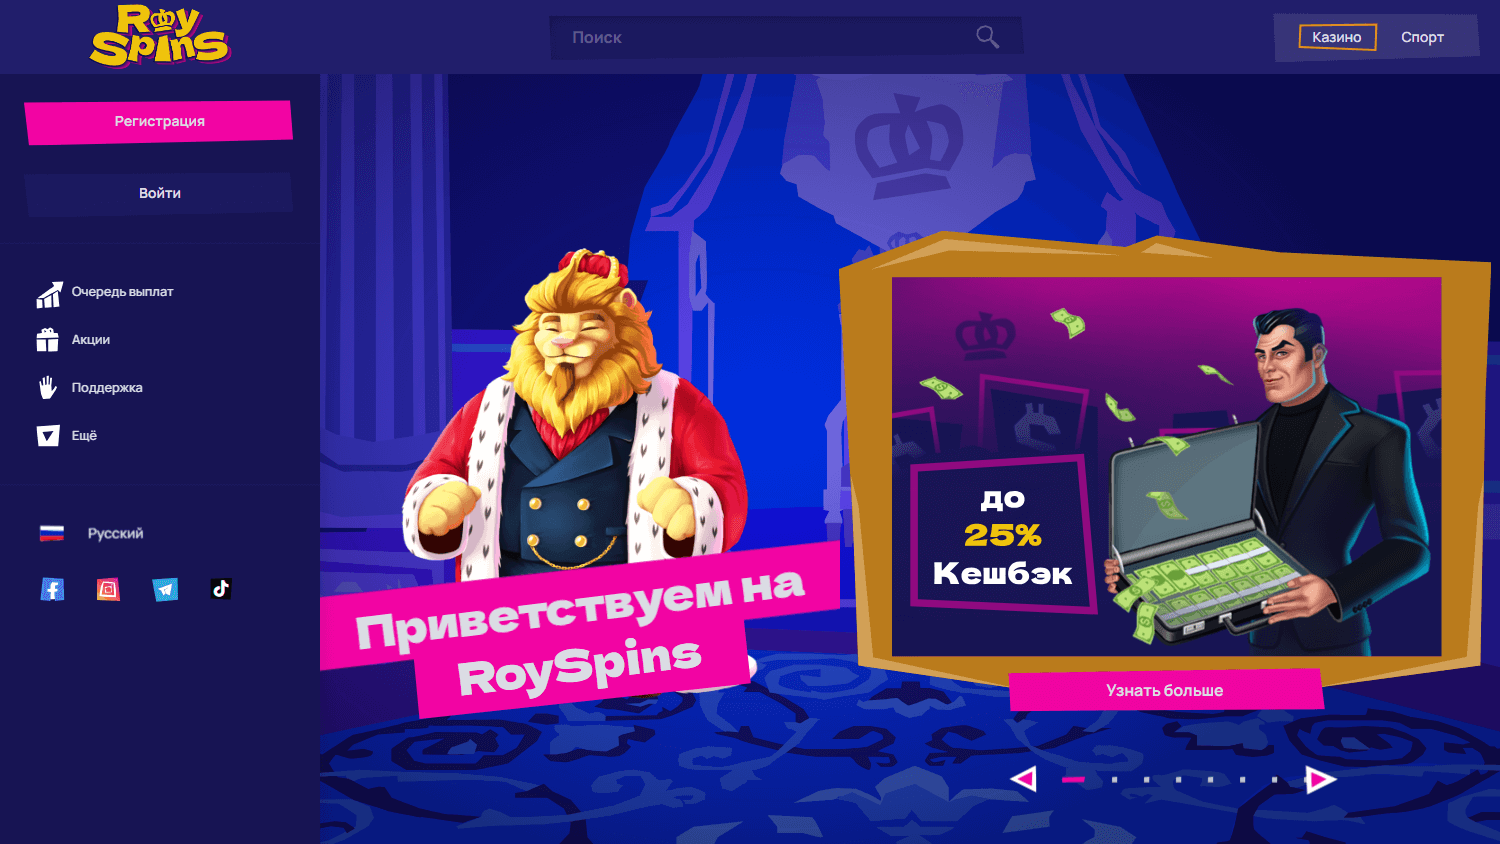 royspins_casino_homepage_desktop